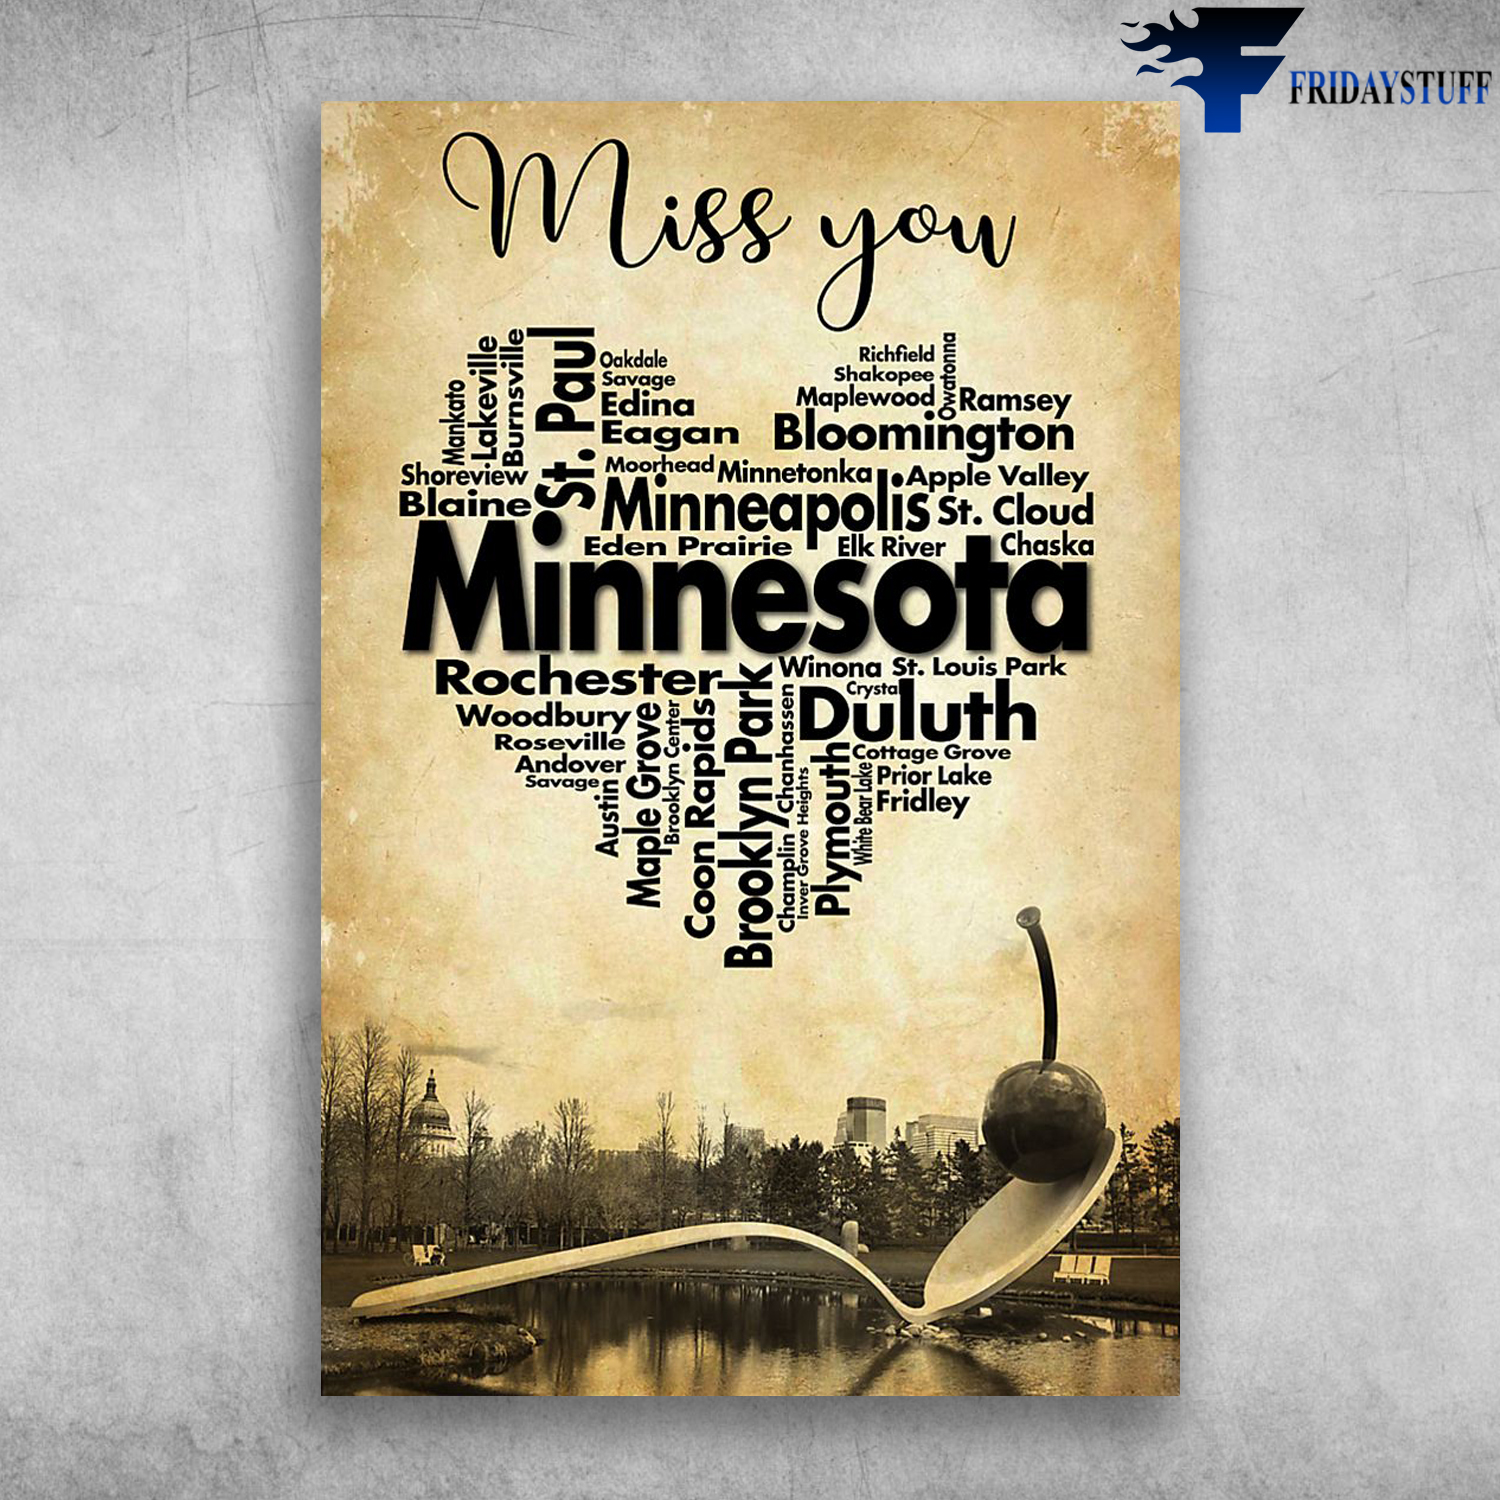 Miss You Minnesota America Minneapolis Bloomington Brooklyn Park